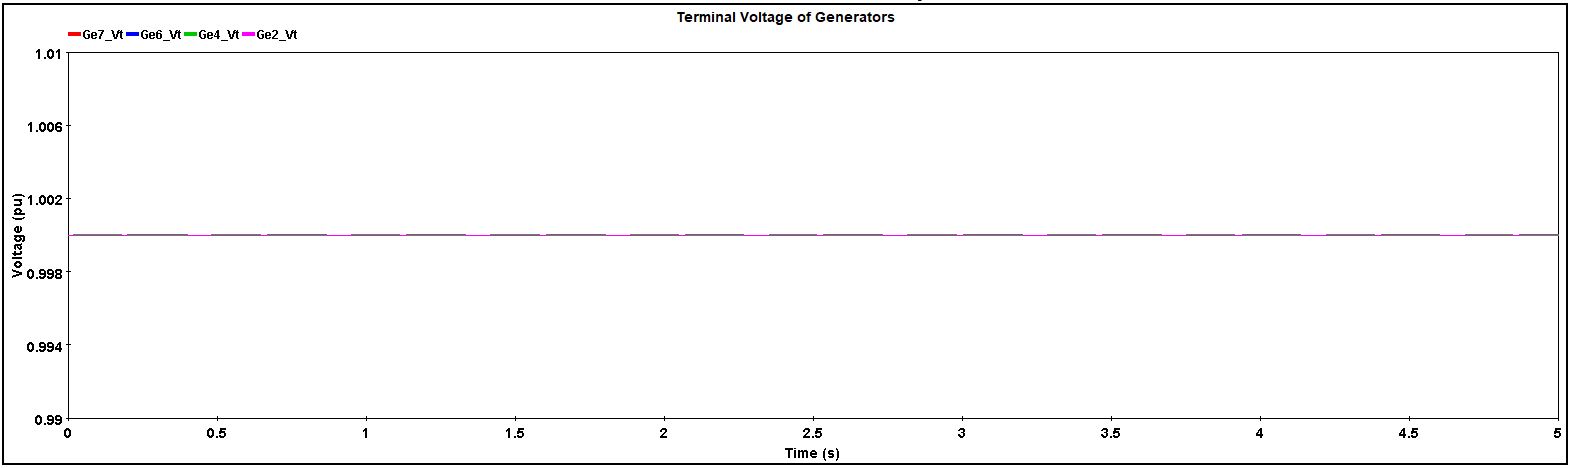 Terminal Voltage of Generators